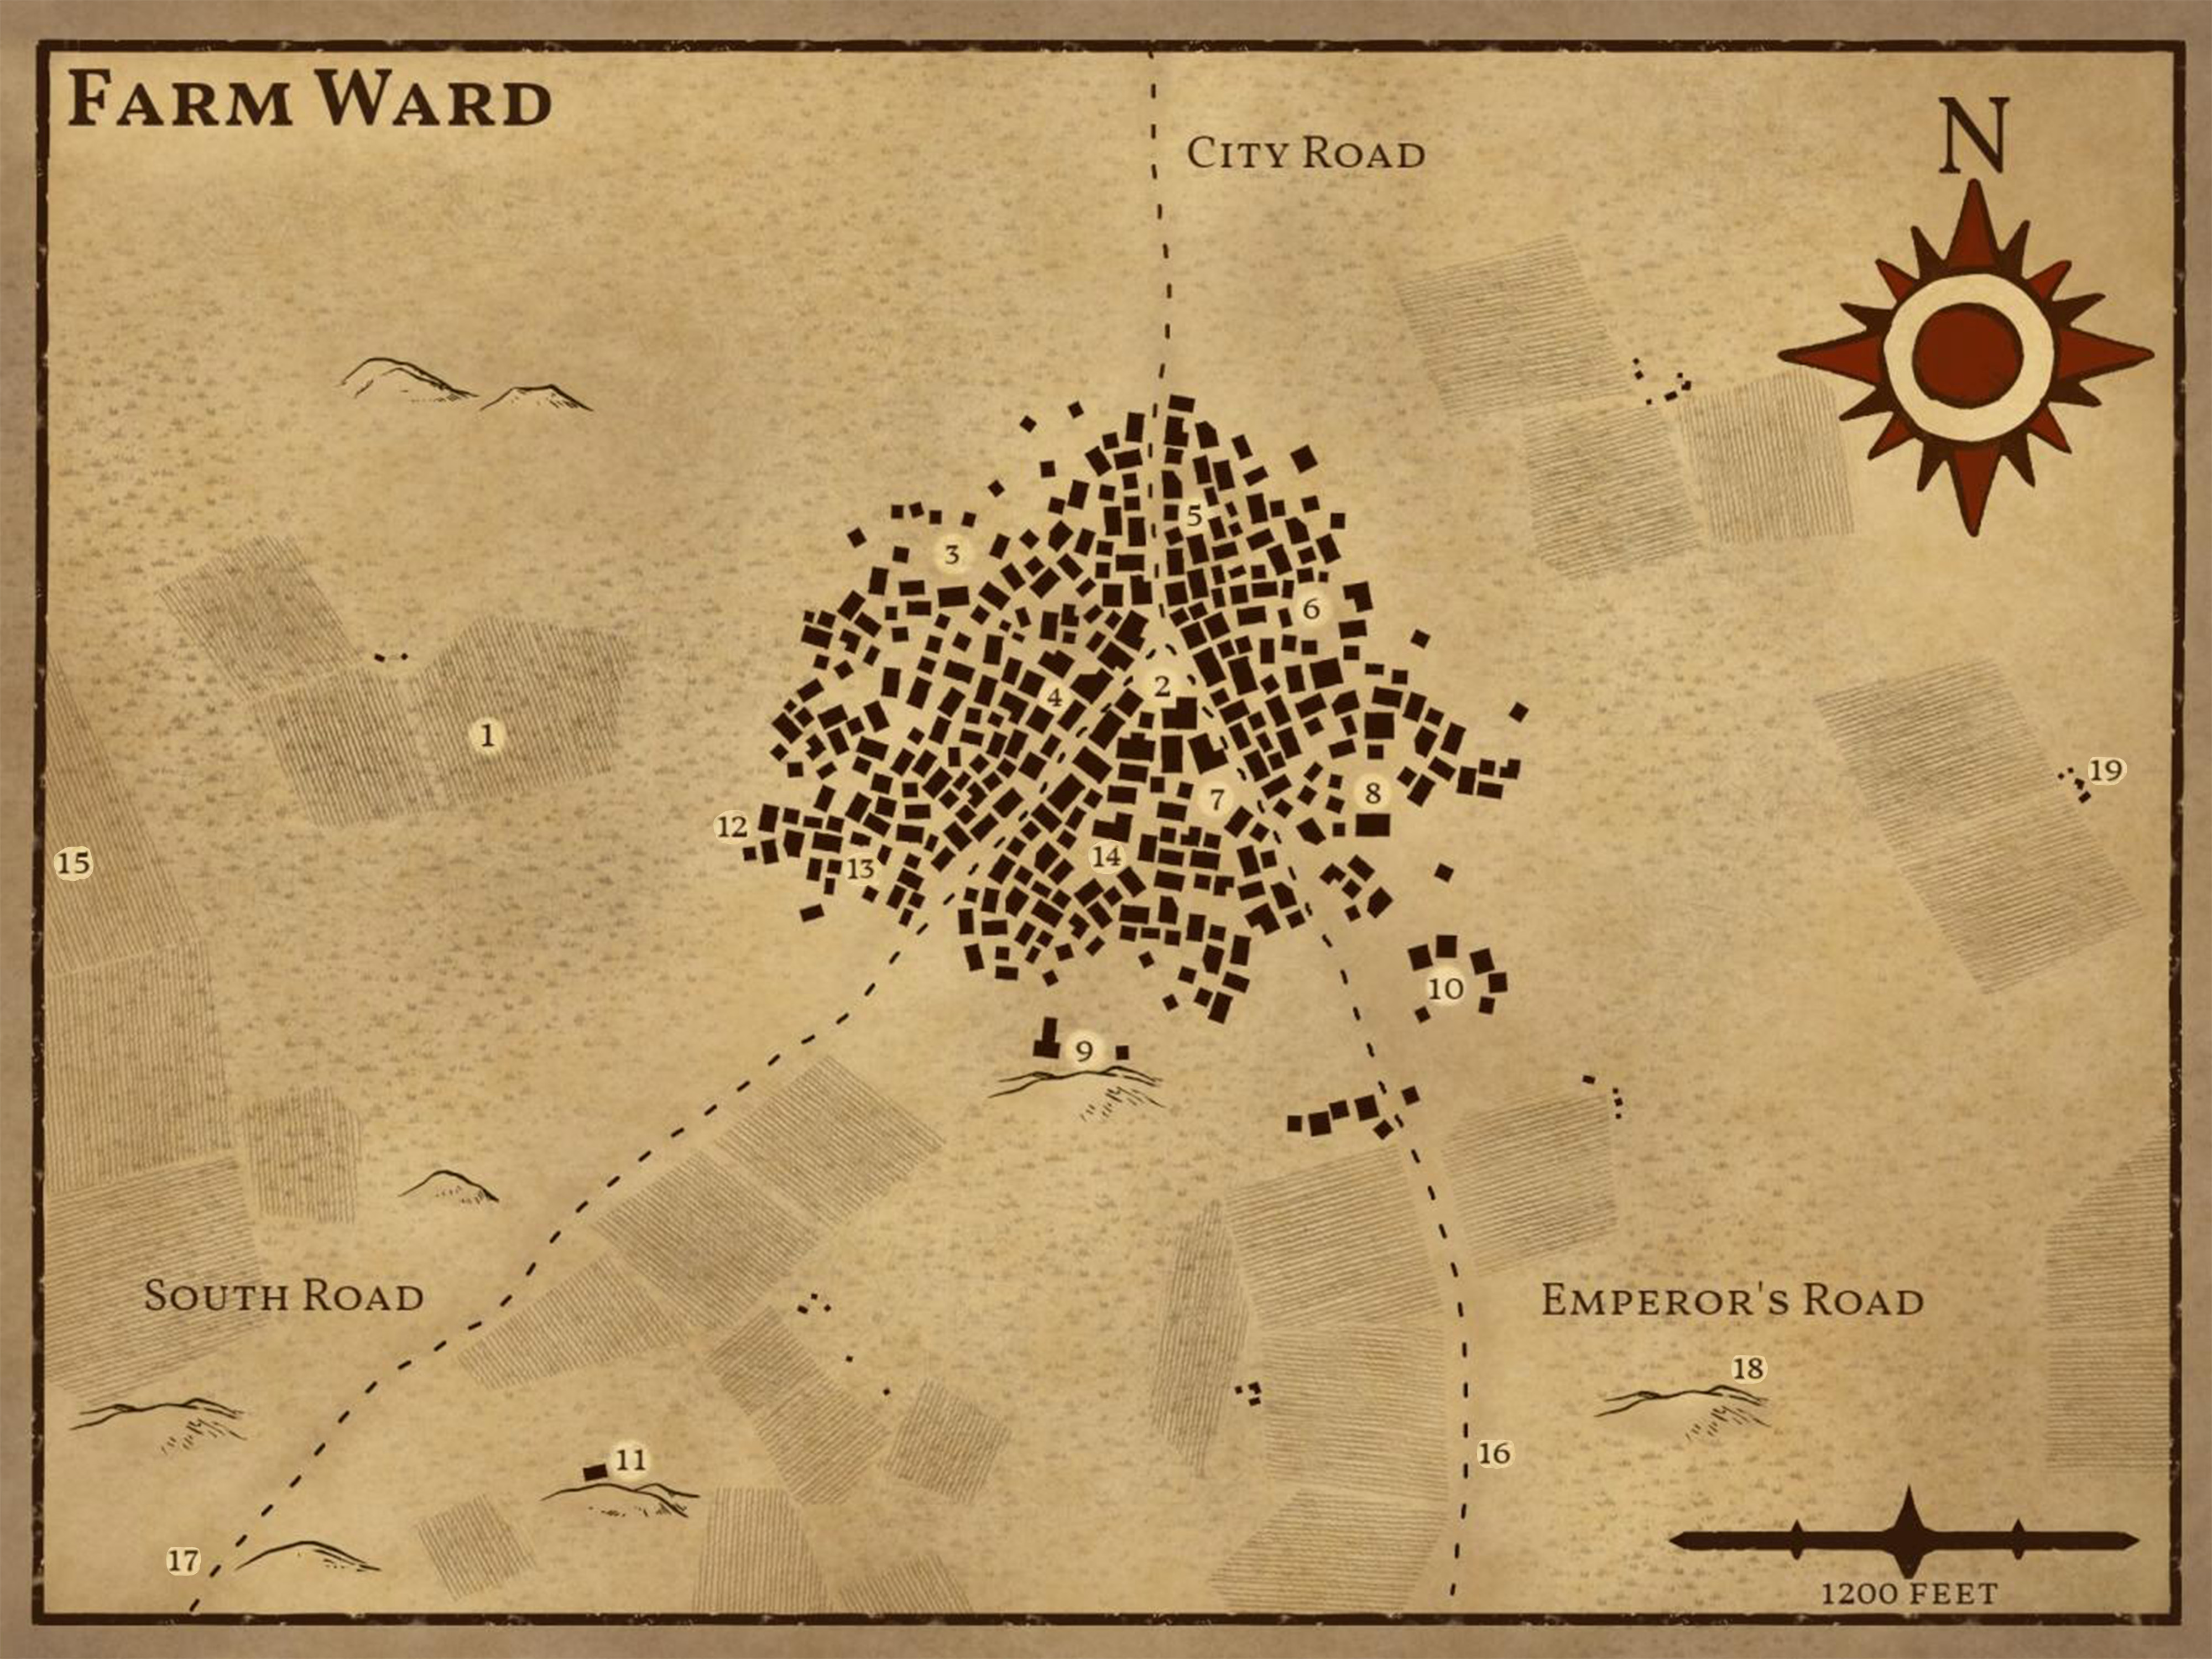 Farm Ward Map Image.jpg